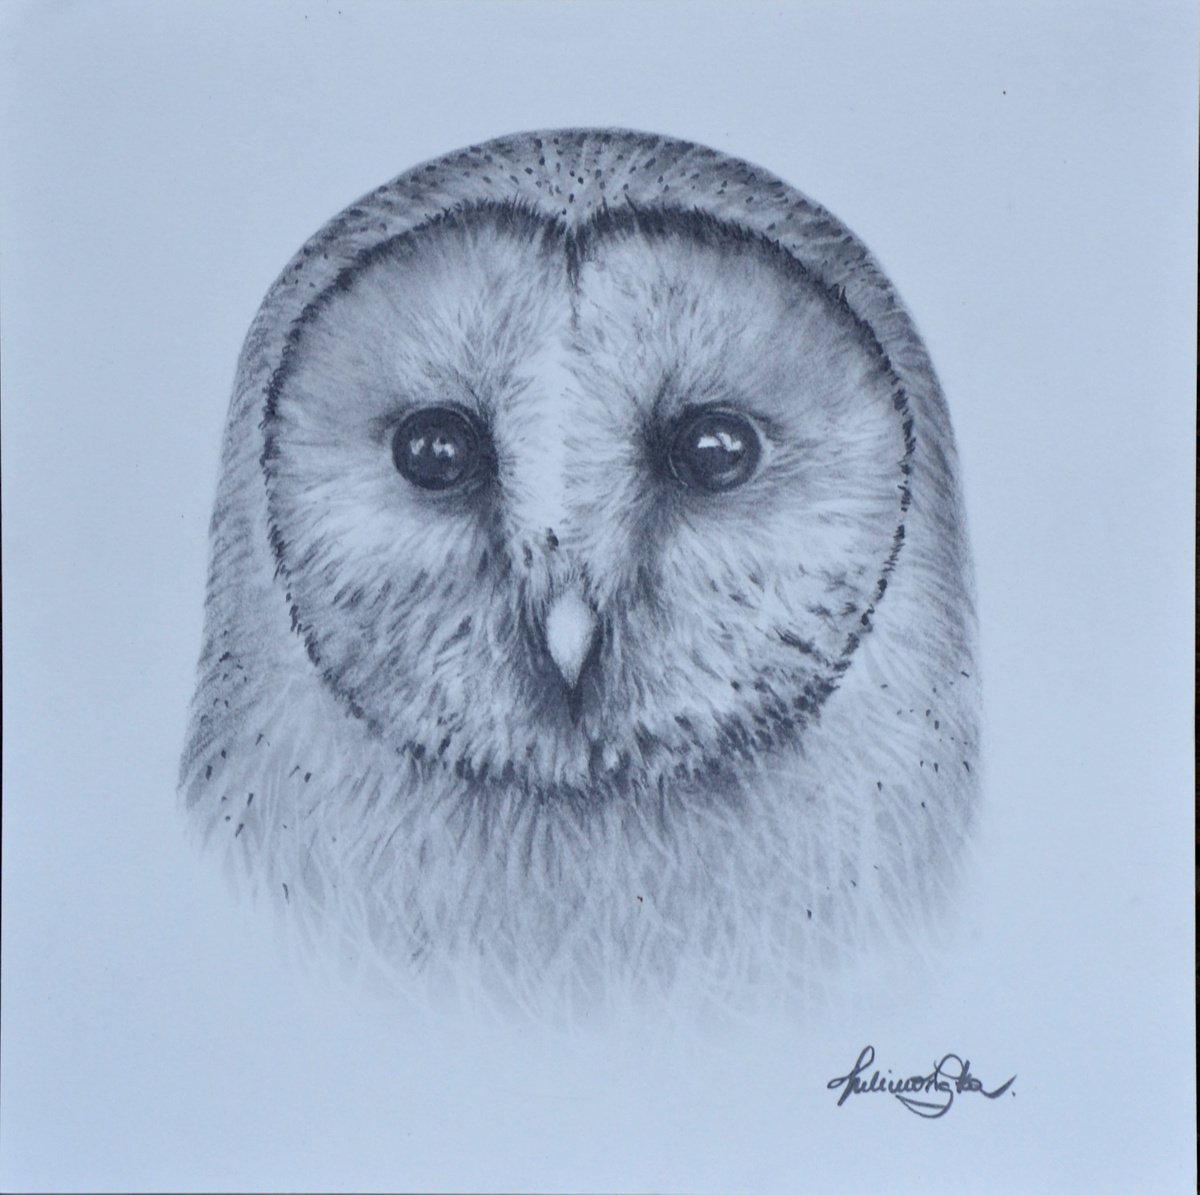 Barn Owl #2 by Maja Tulimowska - Chmielewska